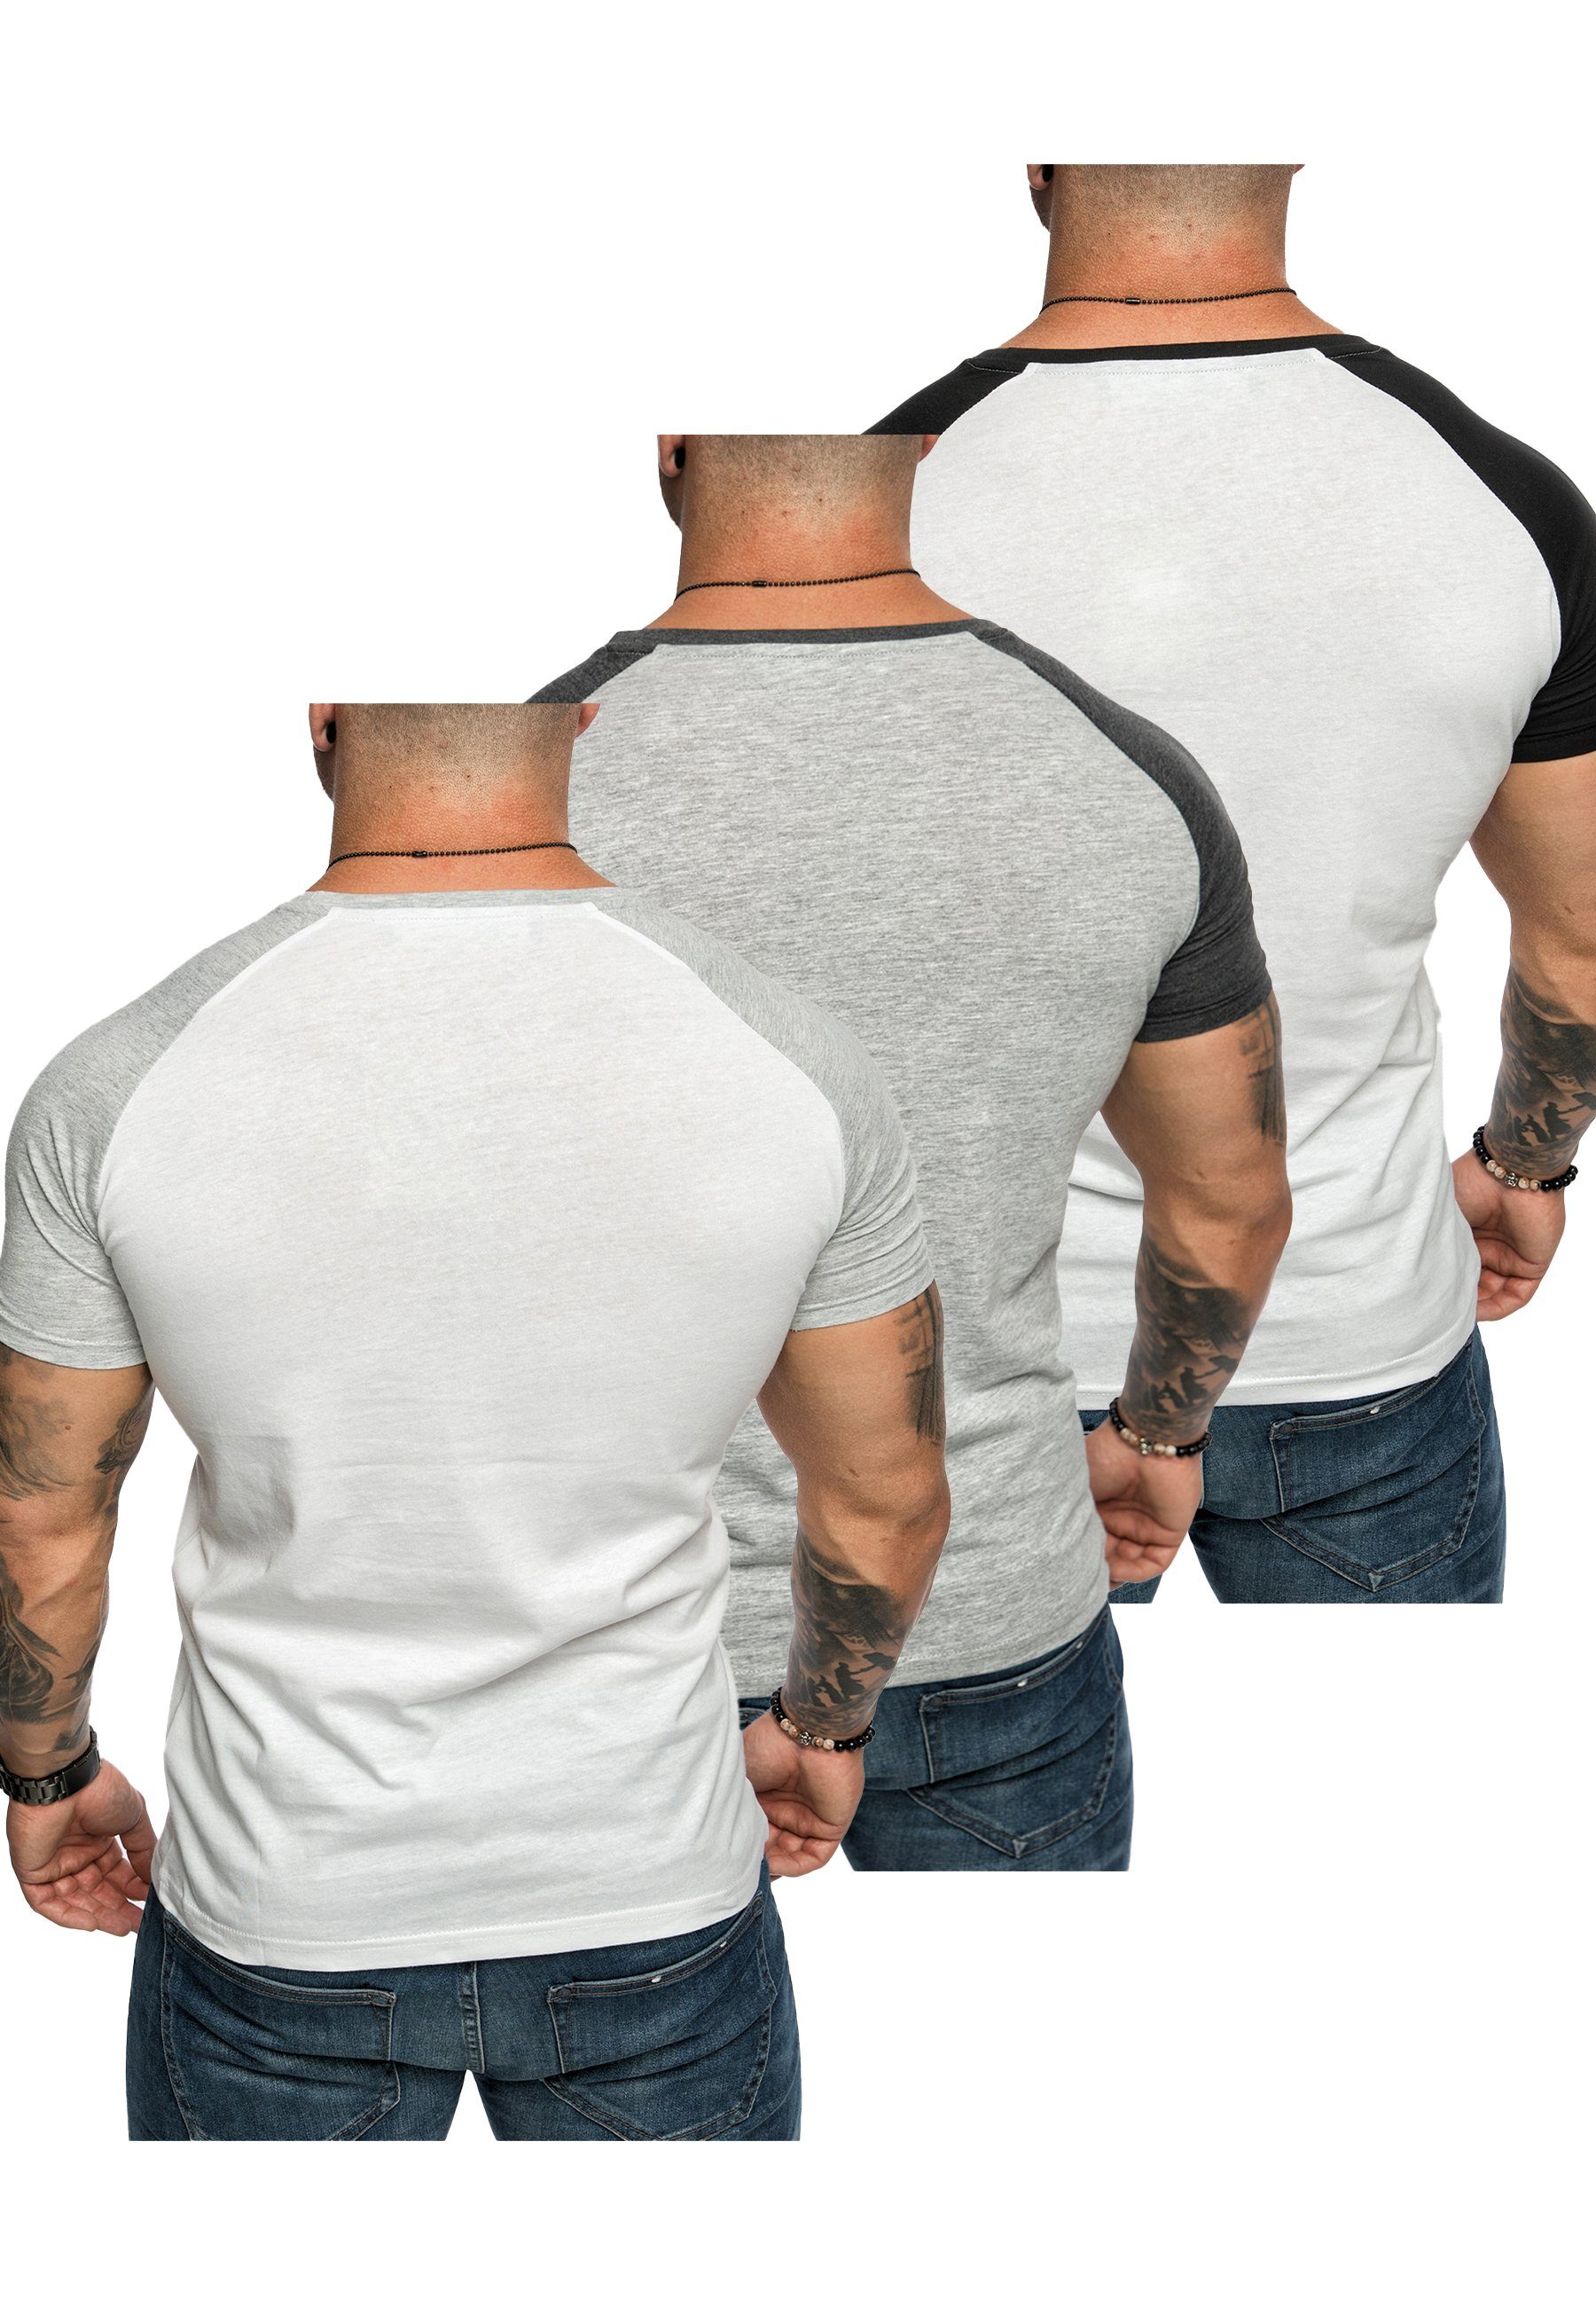 3. Basic T-Shirt Kontrast Amaci&Sons T-Shirts (3er-Pack) Herren Weiß/Schwarz) Oversize T-Shirt 3er-Pack SALEM + Grau/Anthrazit + (Weiß/Grau Raglan